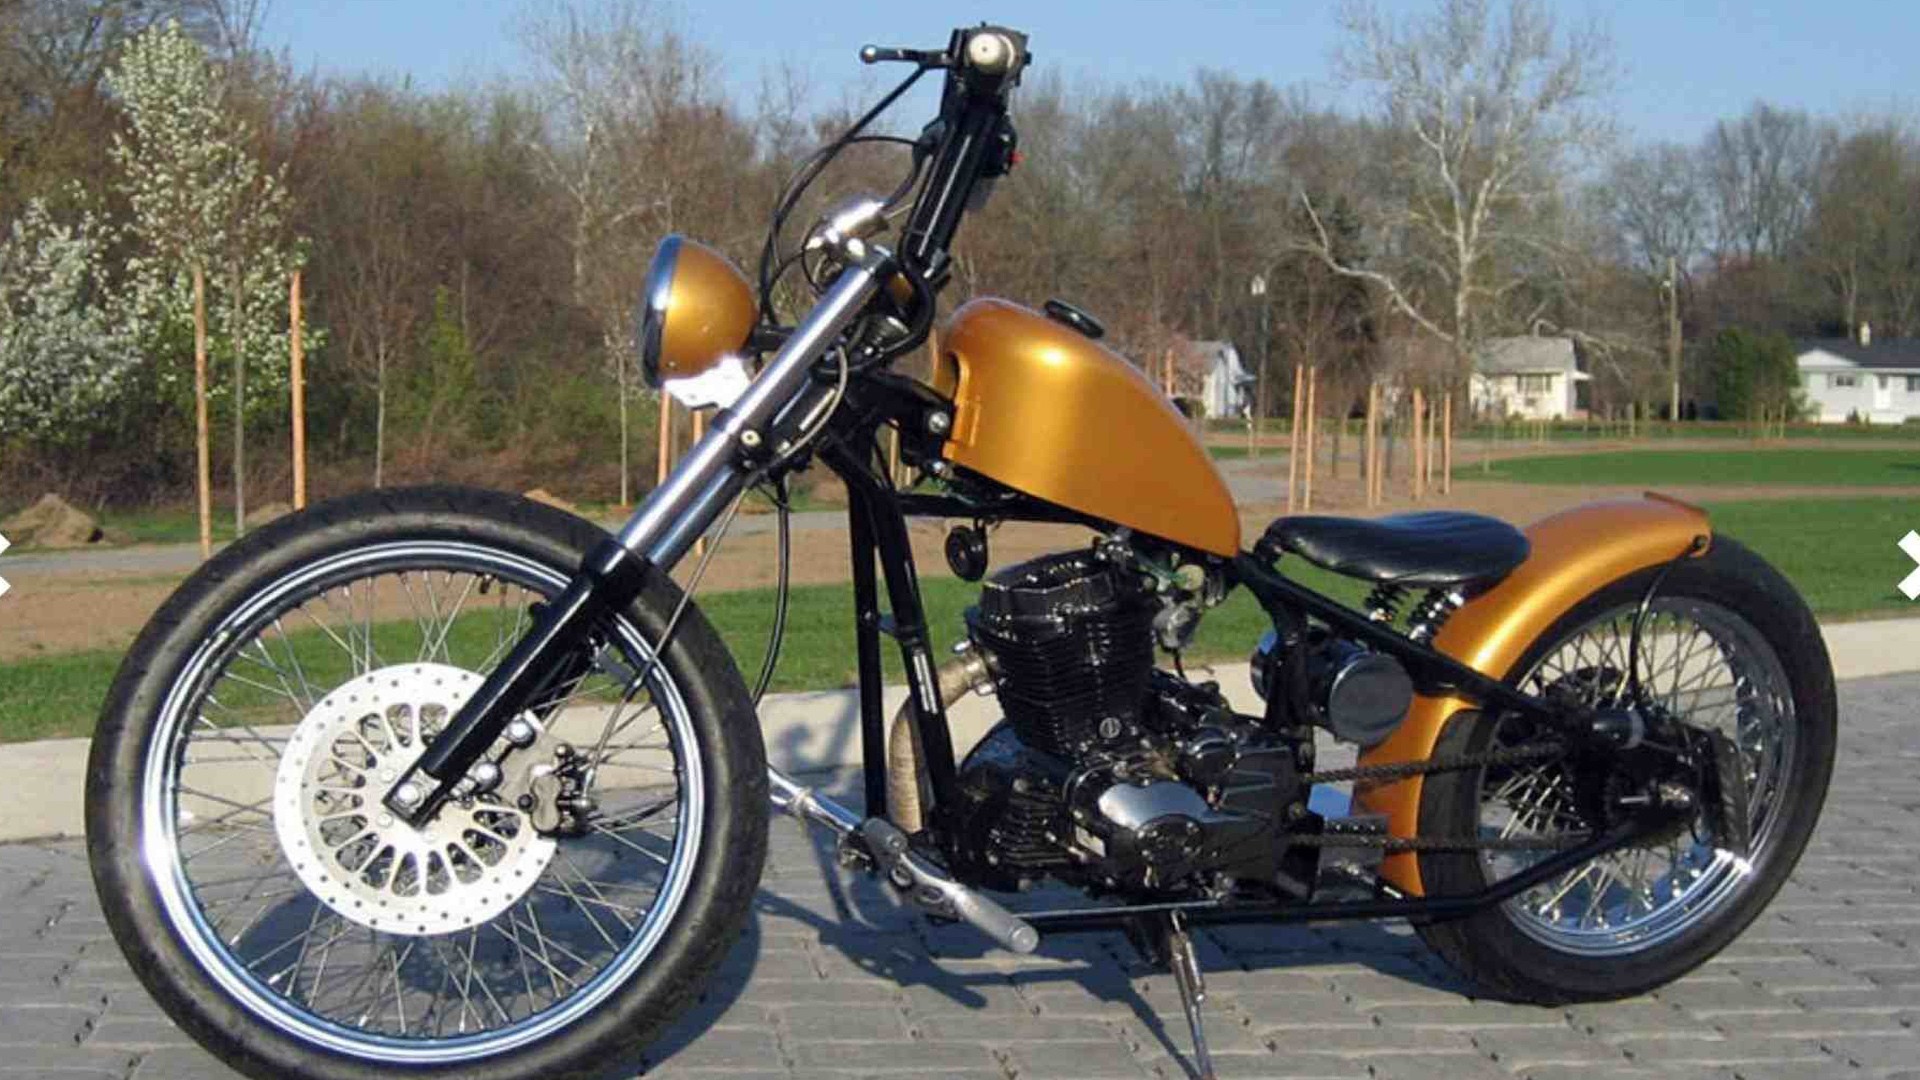 Cleveland Cyclewerks Bobber Golden Color Motorcycle - Gold Bobber Motorcycle - HD Wallpaper 